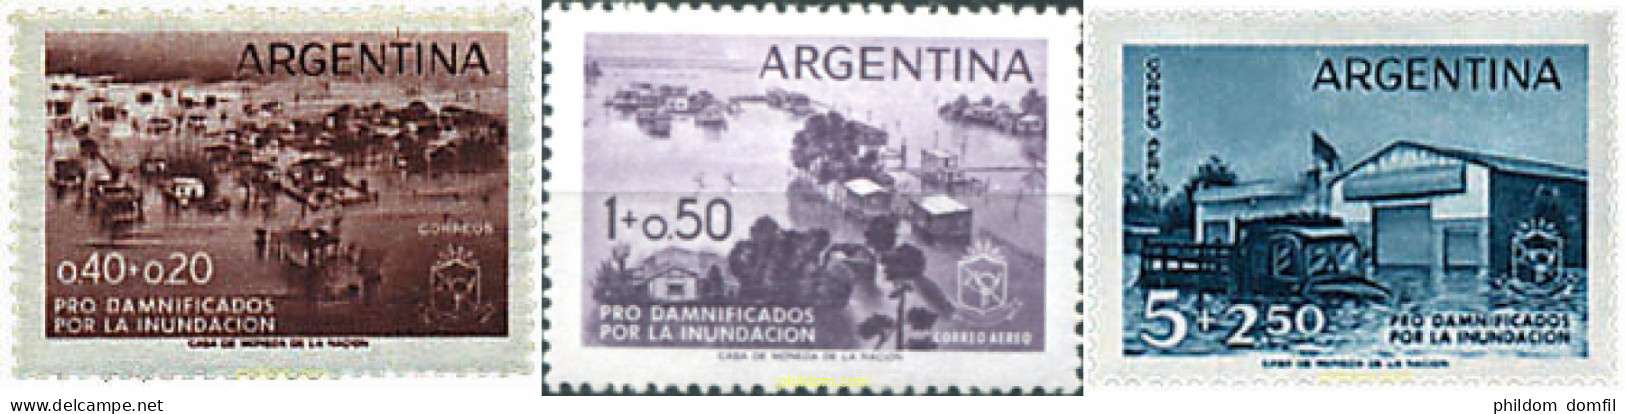 726232 HINGED ARGENTINA 1958 PRO-INUNDACIONES - Ongebruikt